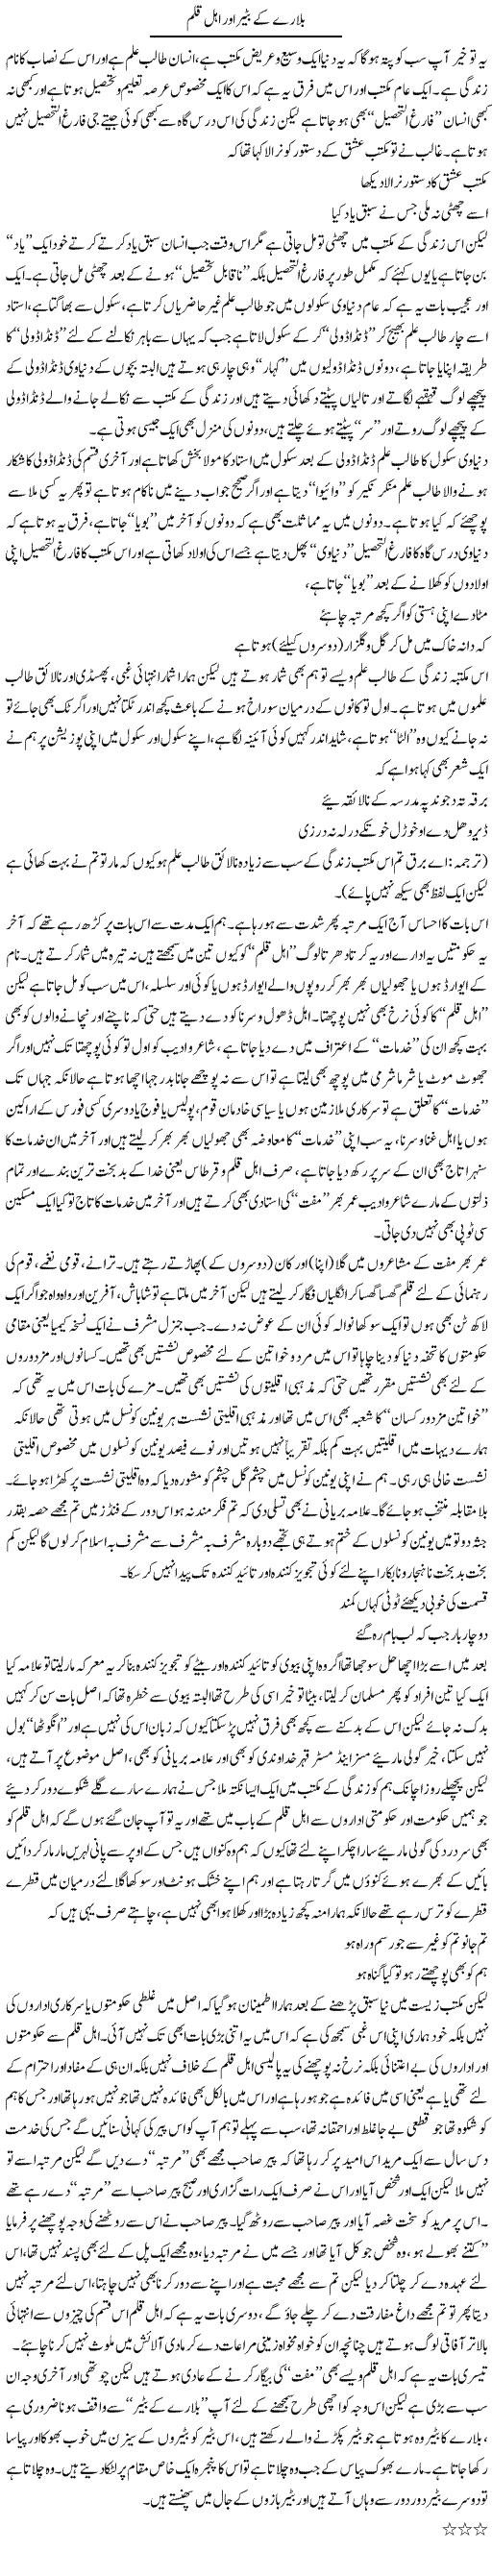 The Writers Express Column Saadullah Barq 24 May 2011